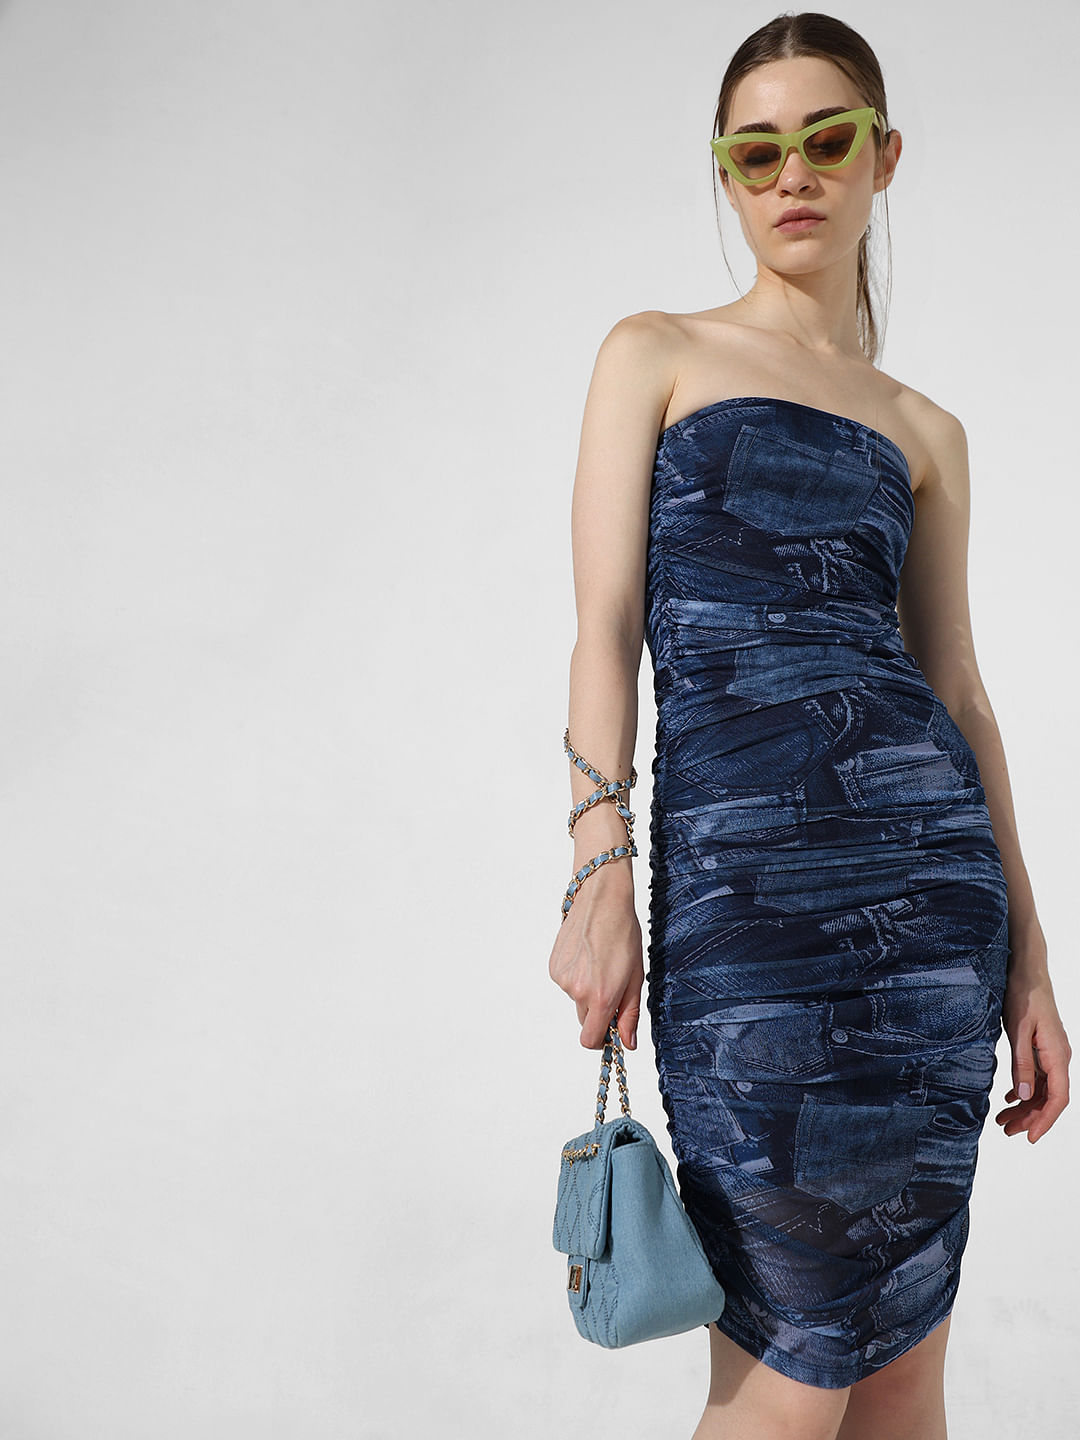 Kylie Jenner's Blue Bodycon Dress From Sorella Boutique | POPSUGAR Fashion  UK